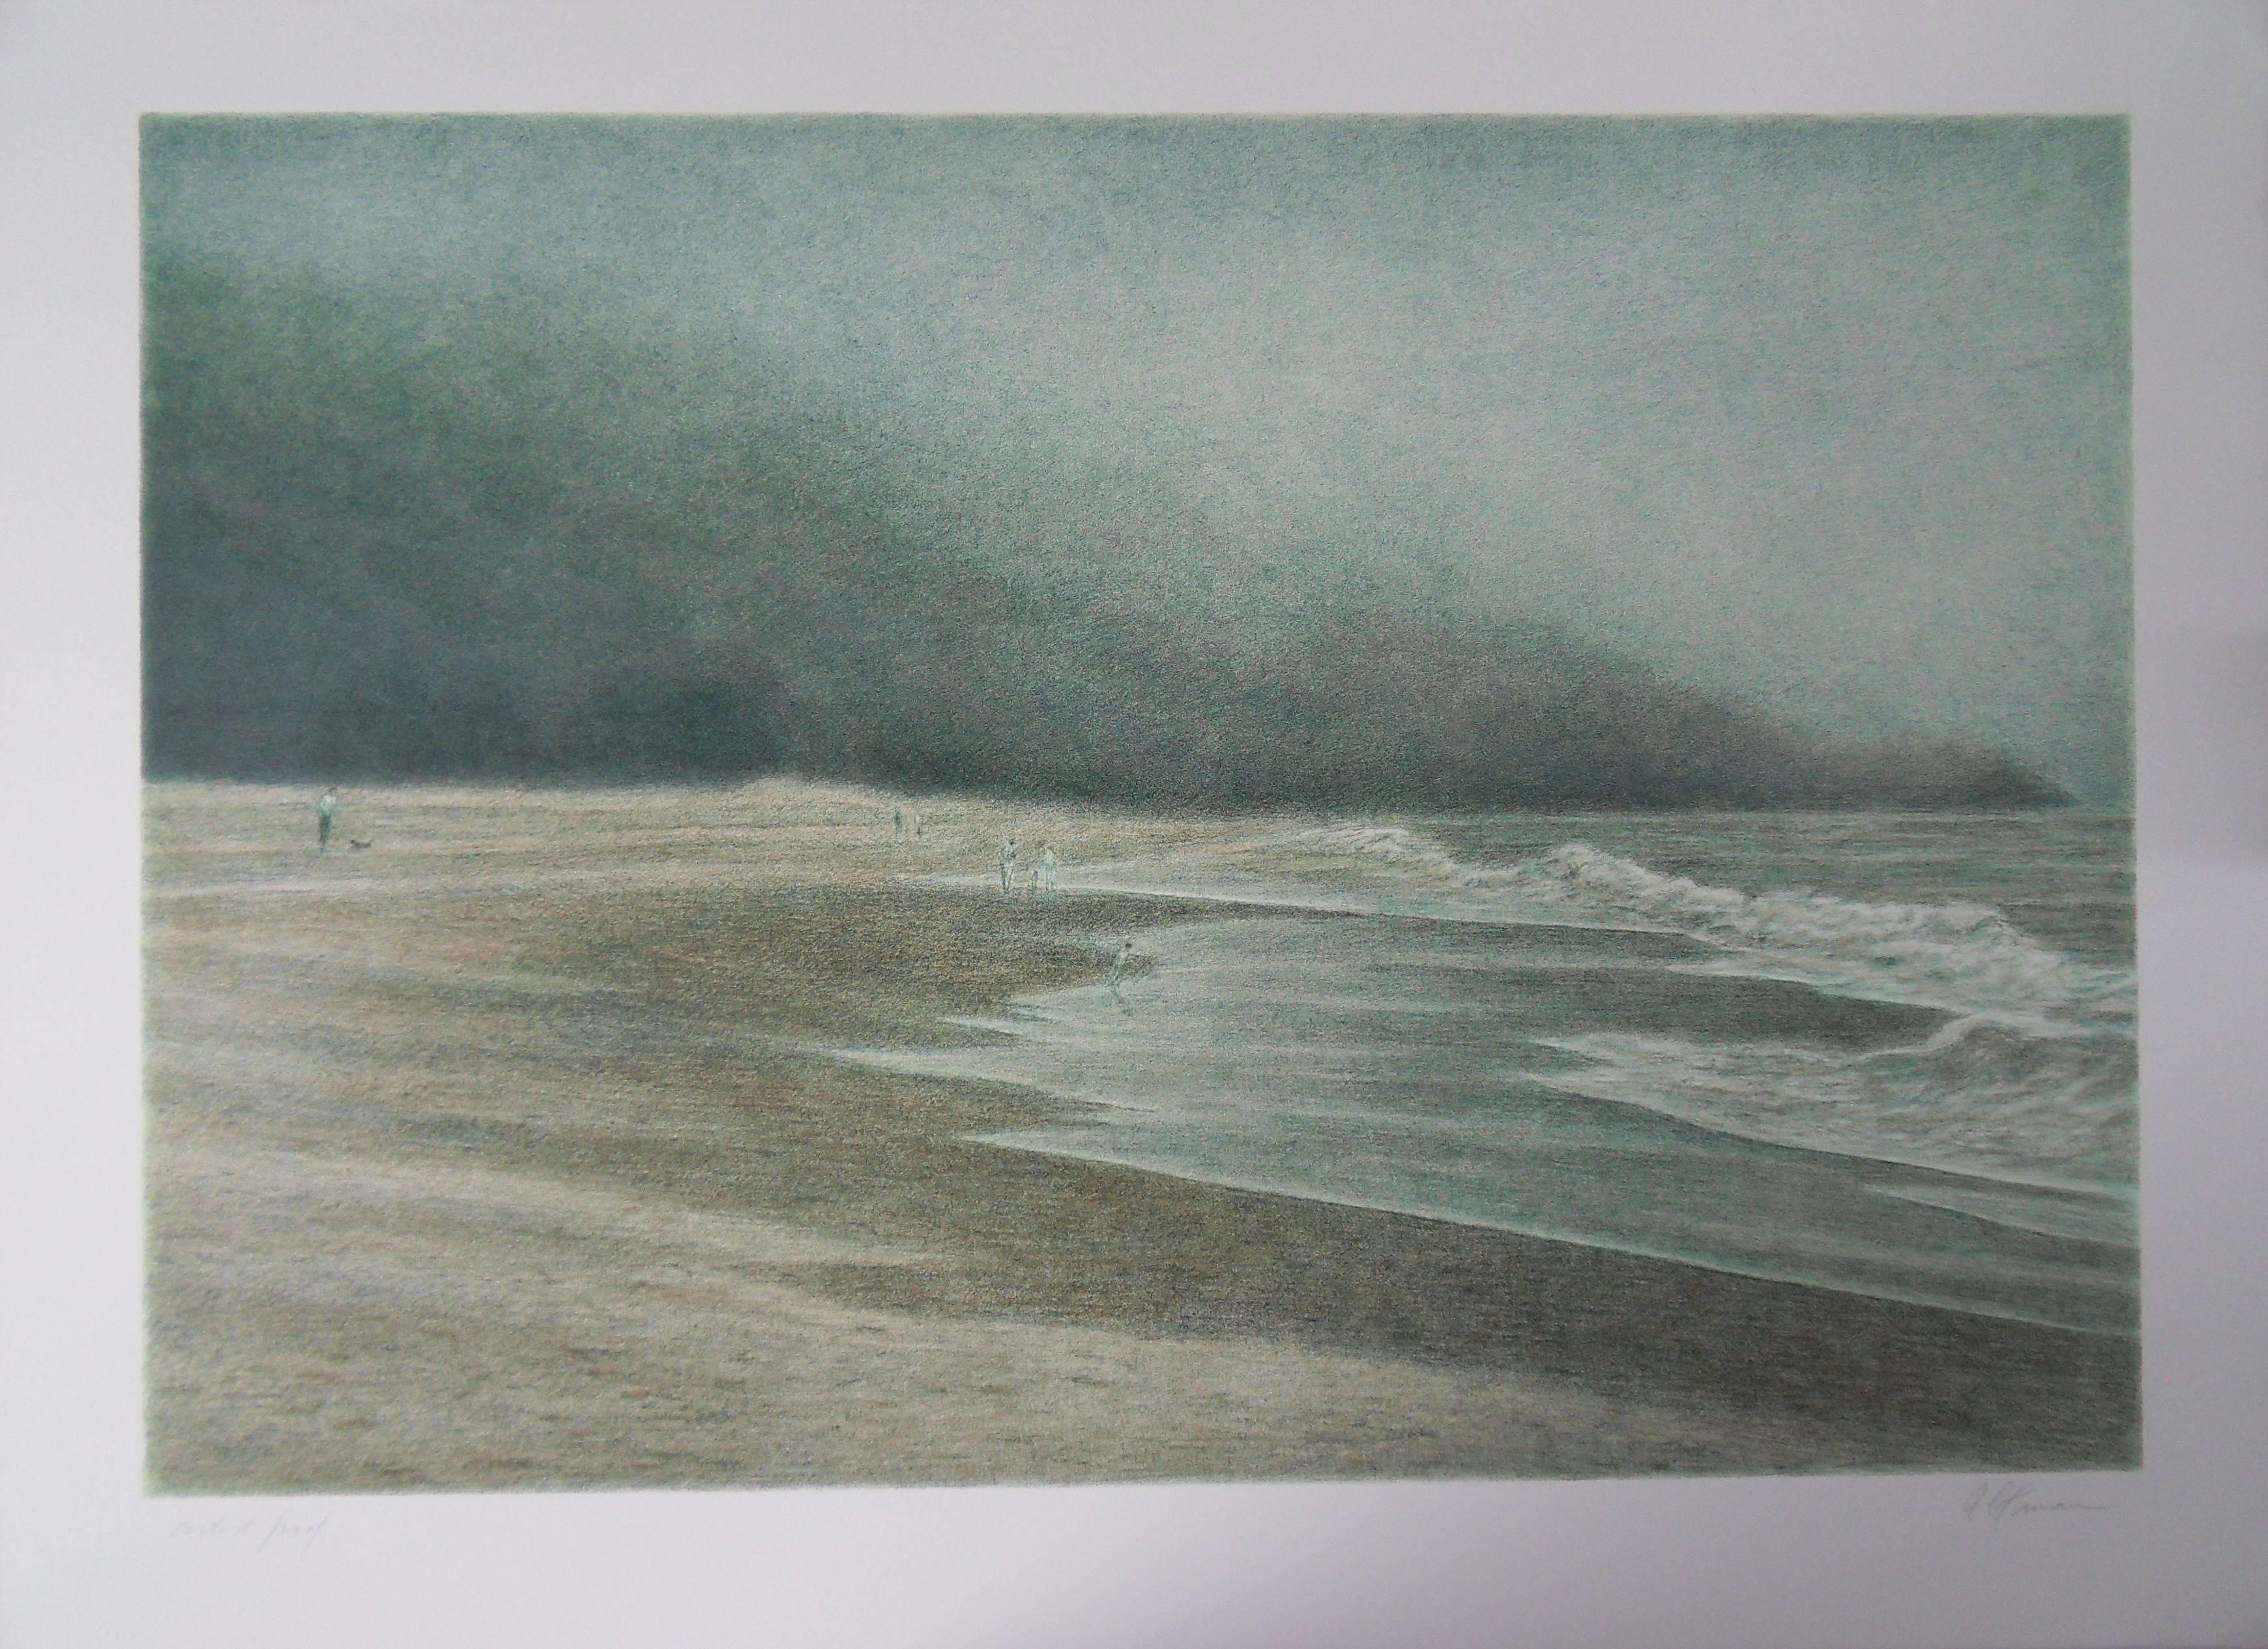 Harold Altman Landscape Print - Seascape : Ocean and Beach - Original handsigned lithograph